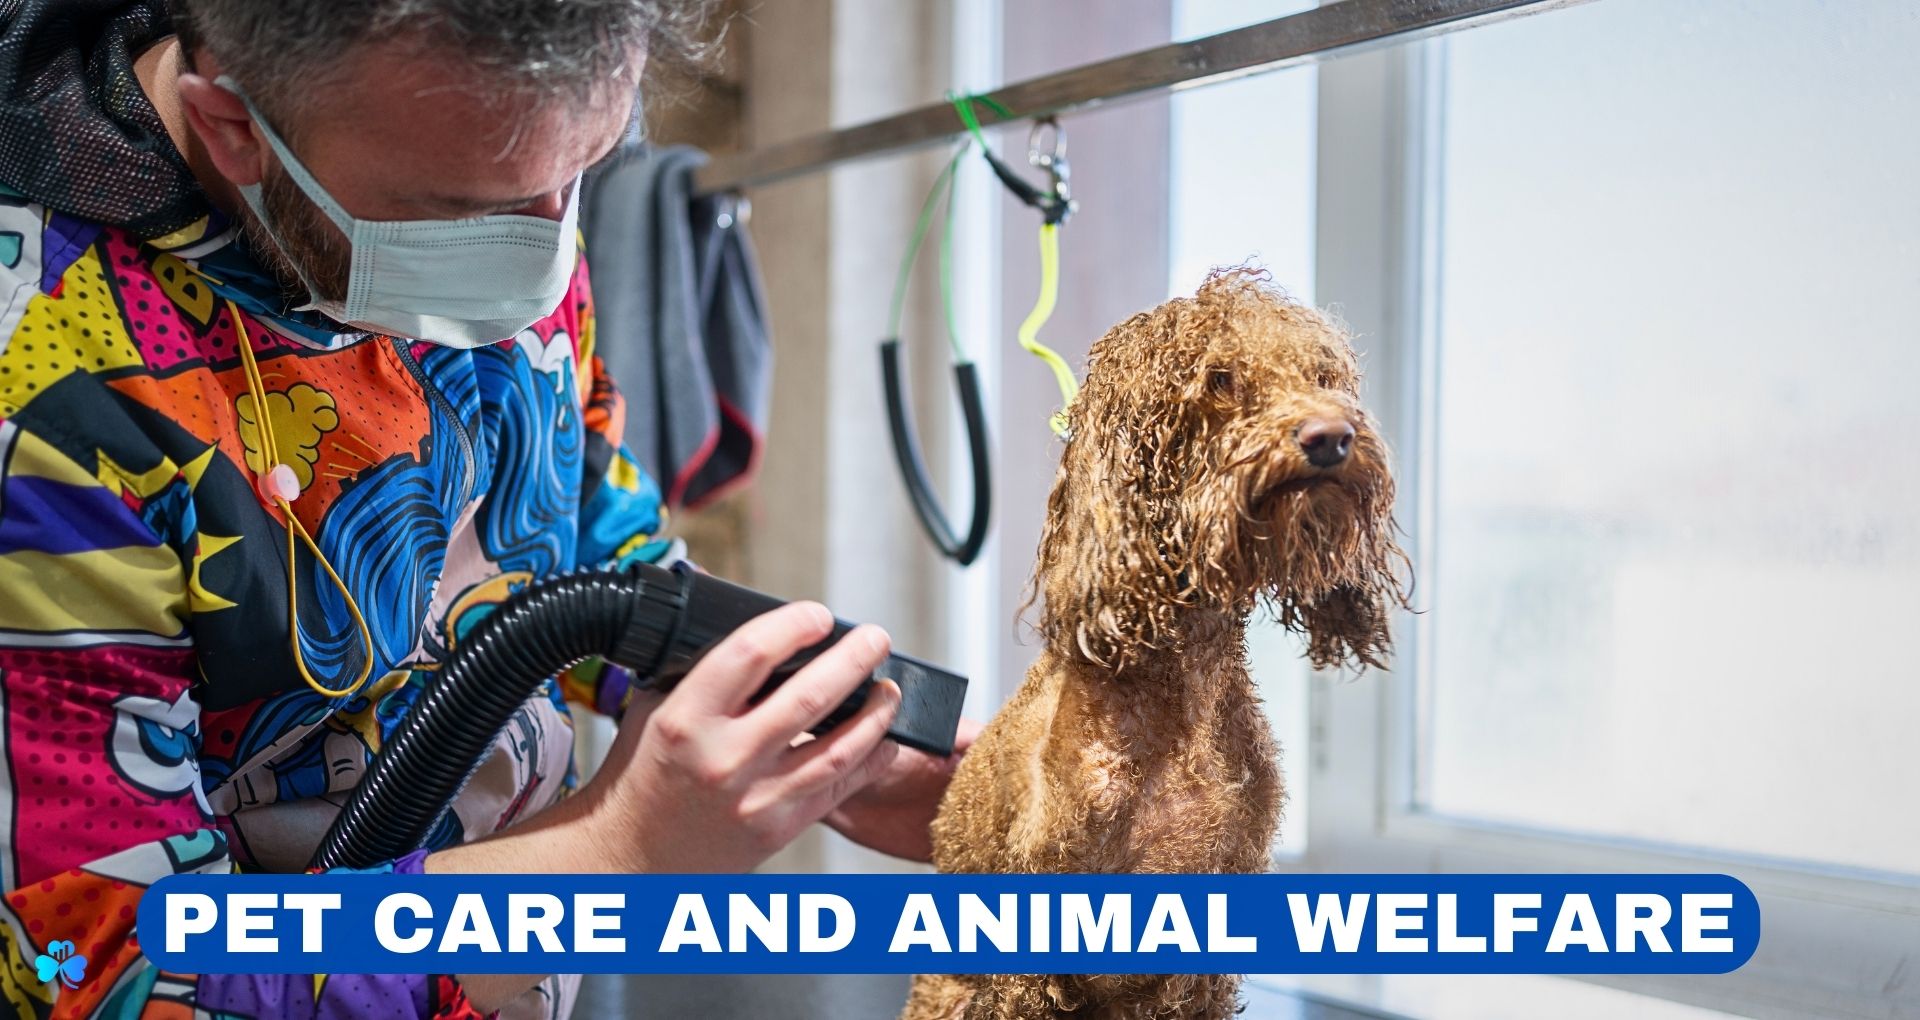 Pet care and animal welfare